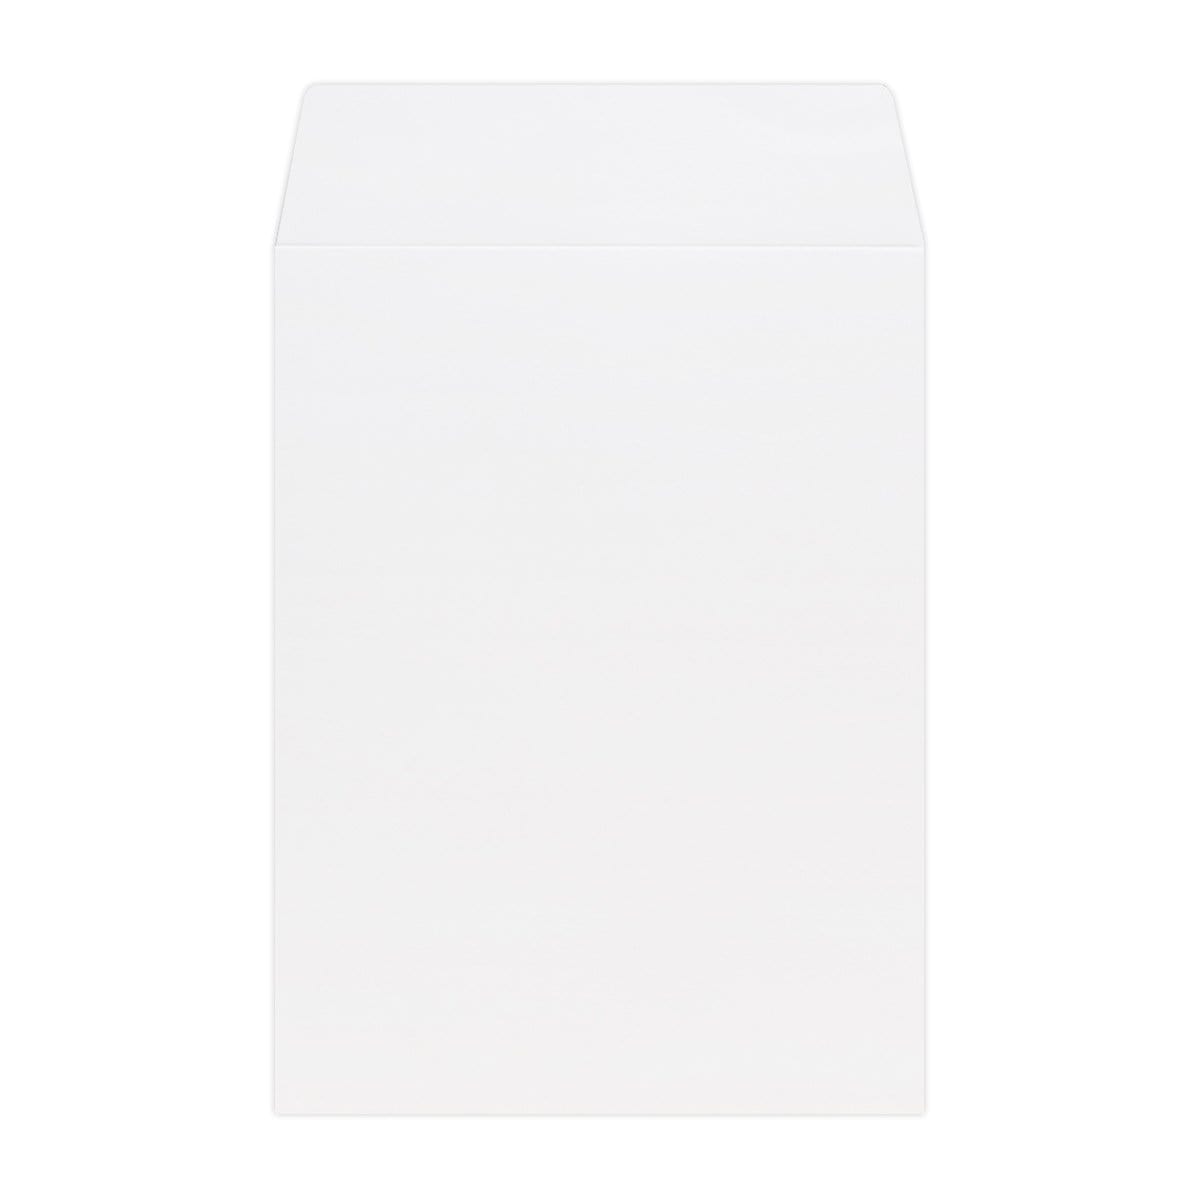 products/178x241-luxury-white-envelopes1.jpg